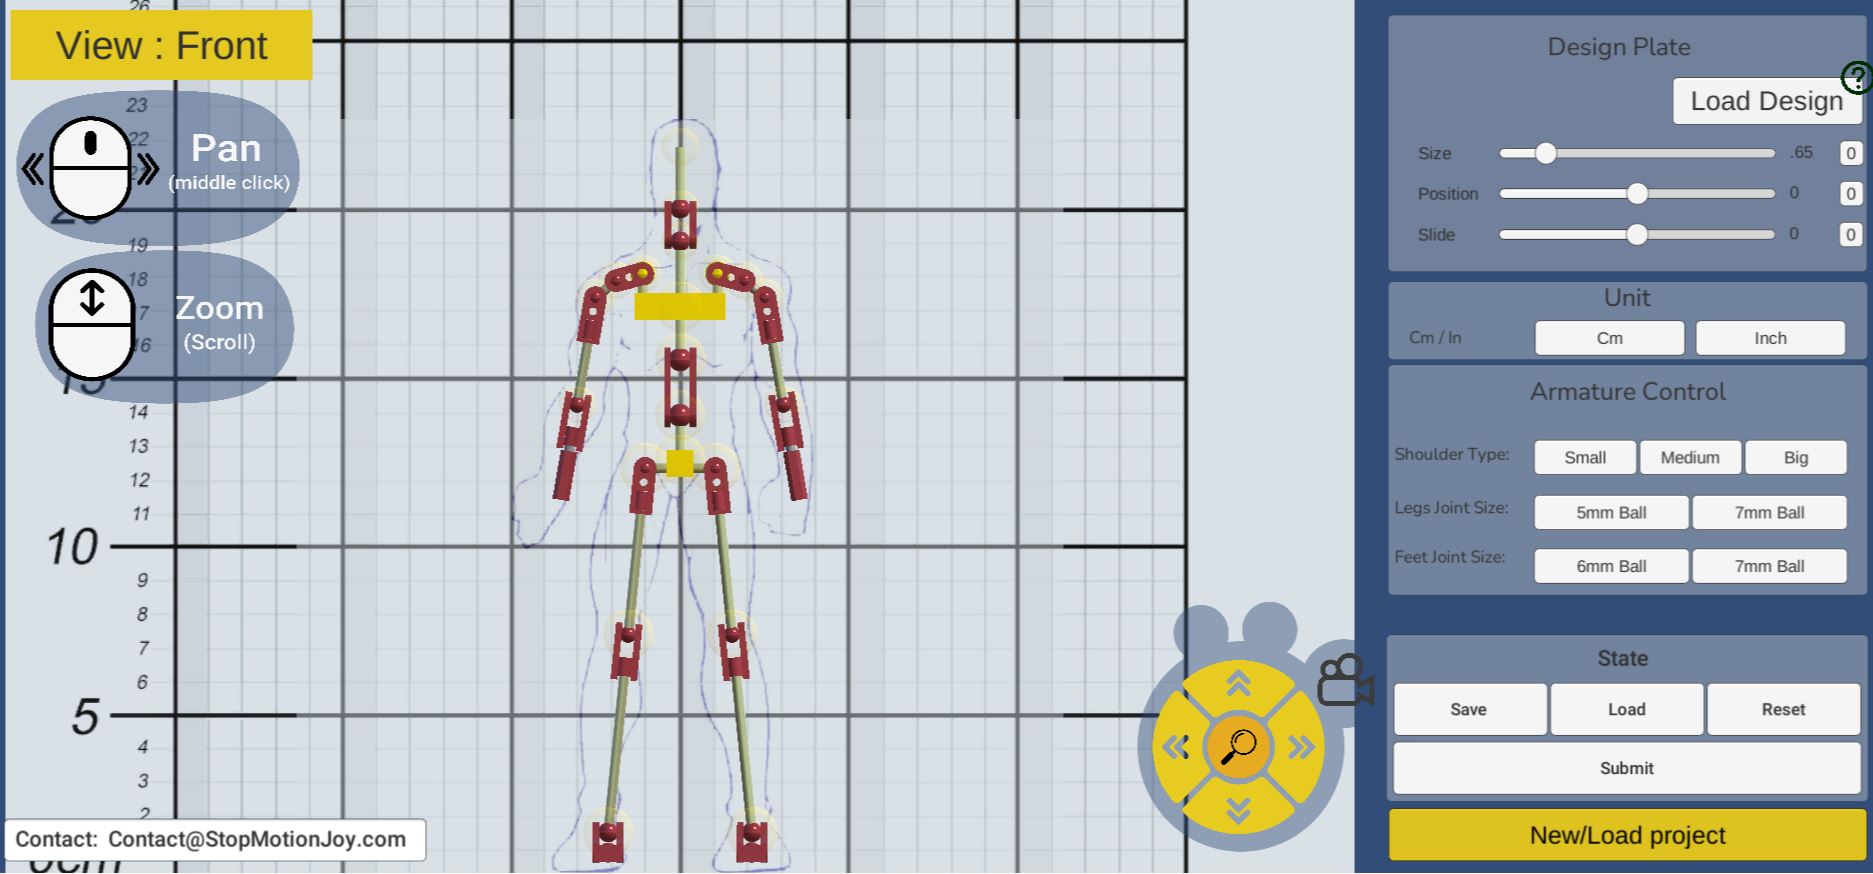 web based interactive stop motion armature design platform